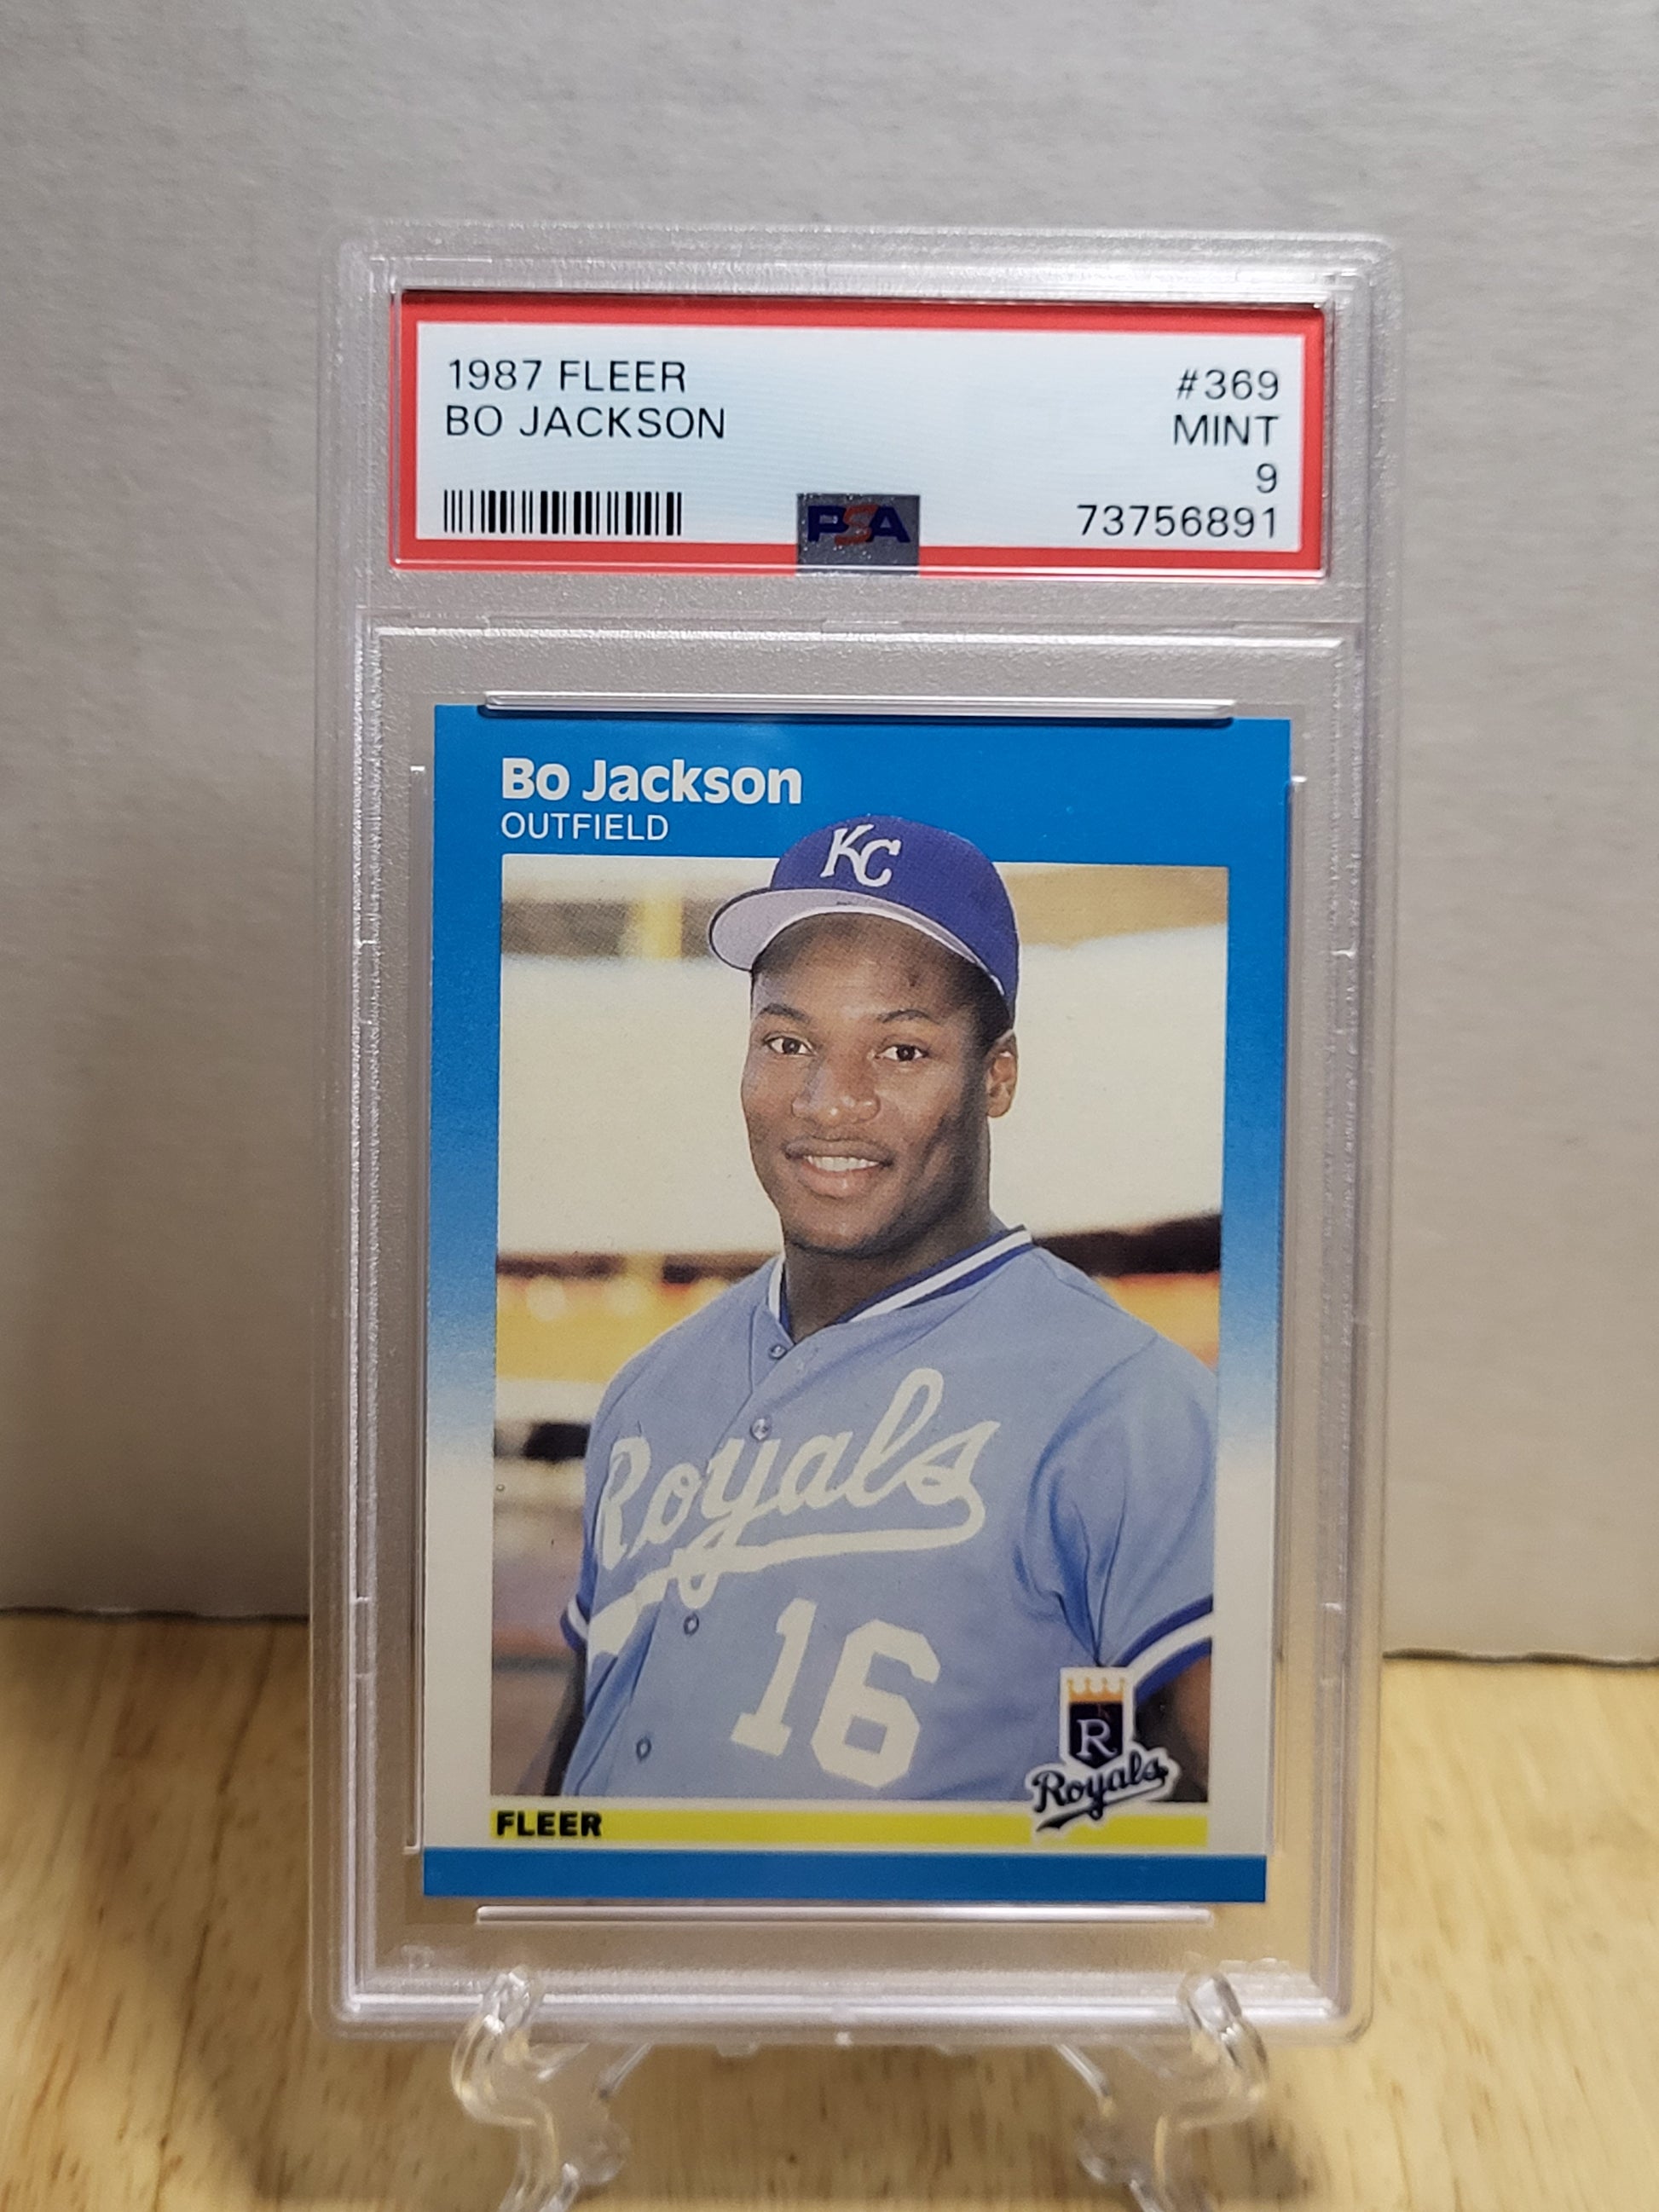 Bo Jackson Baseball Card 1987 Fleer 369 Rookie Card PSA 